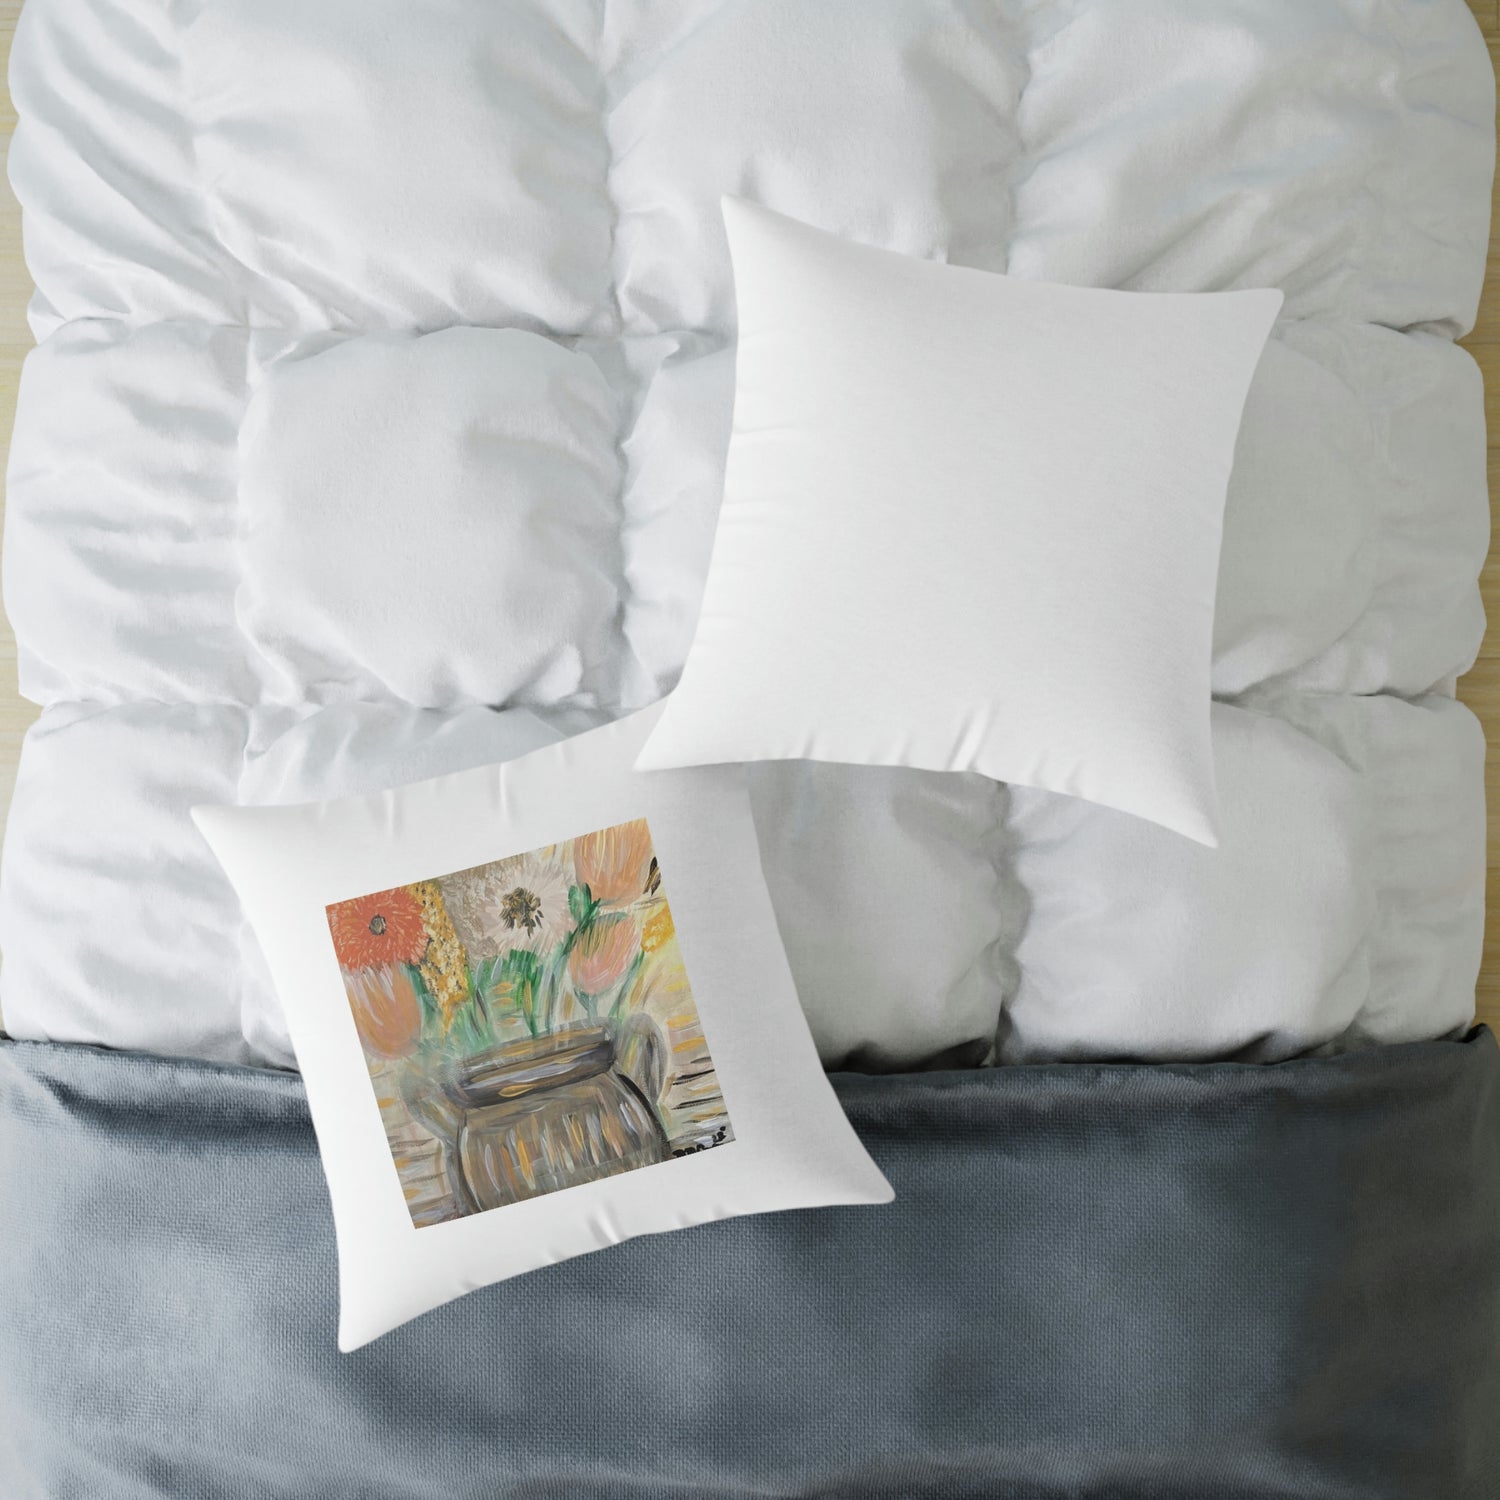 The Greg White Spun Polyester Pillow